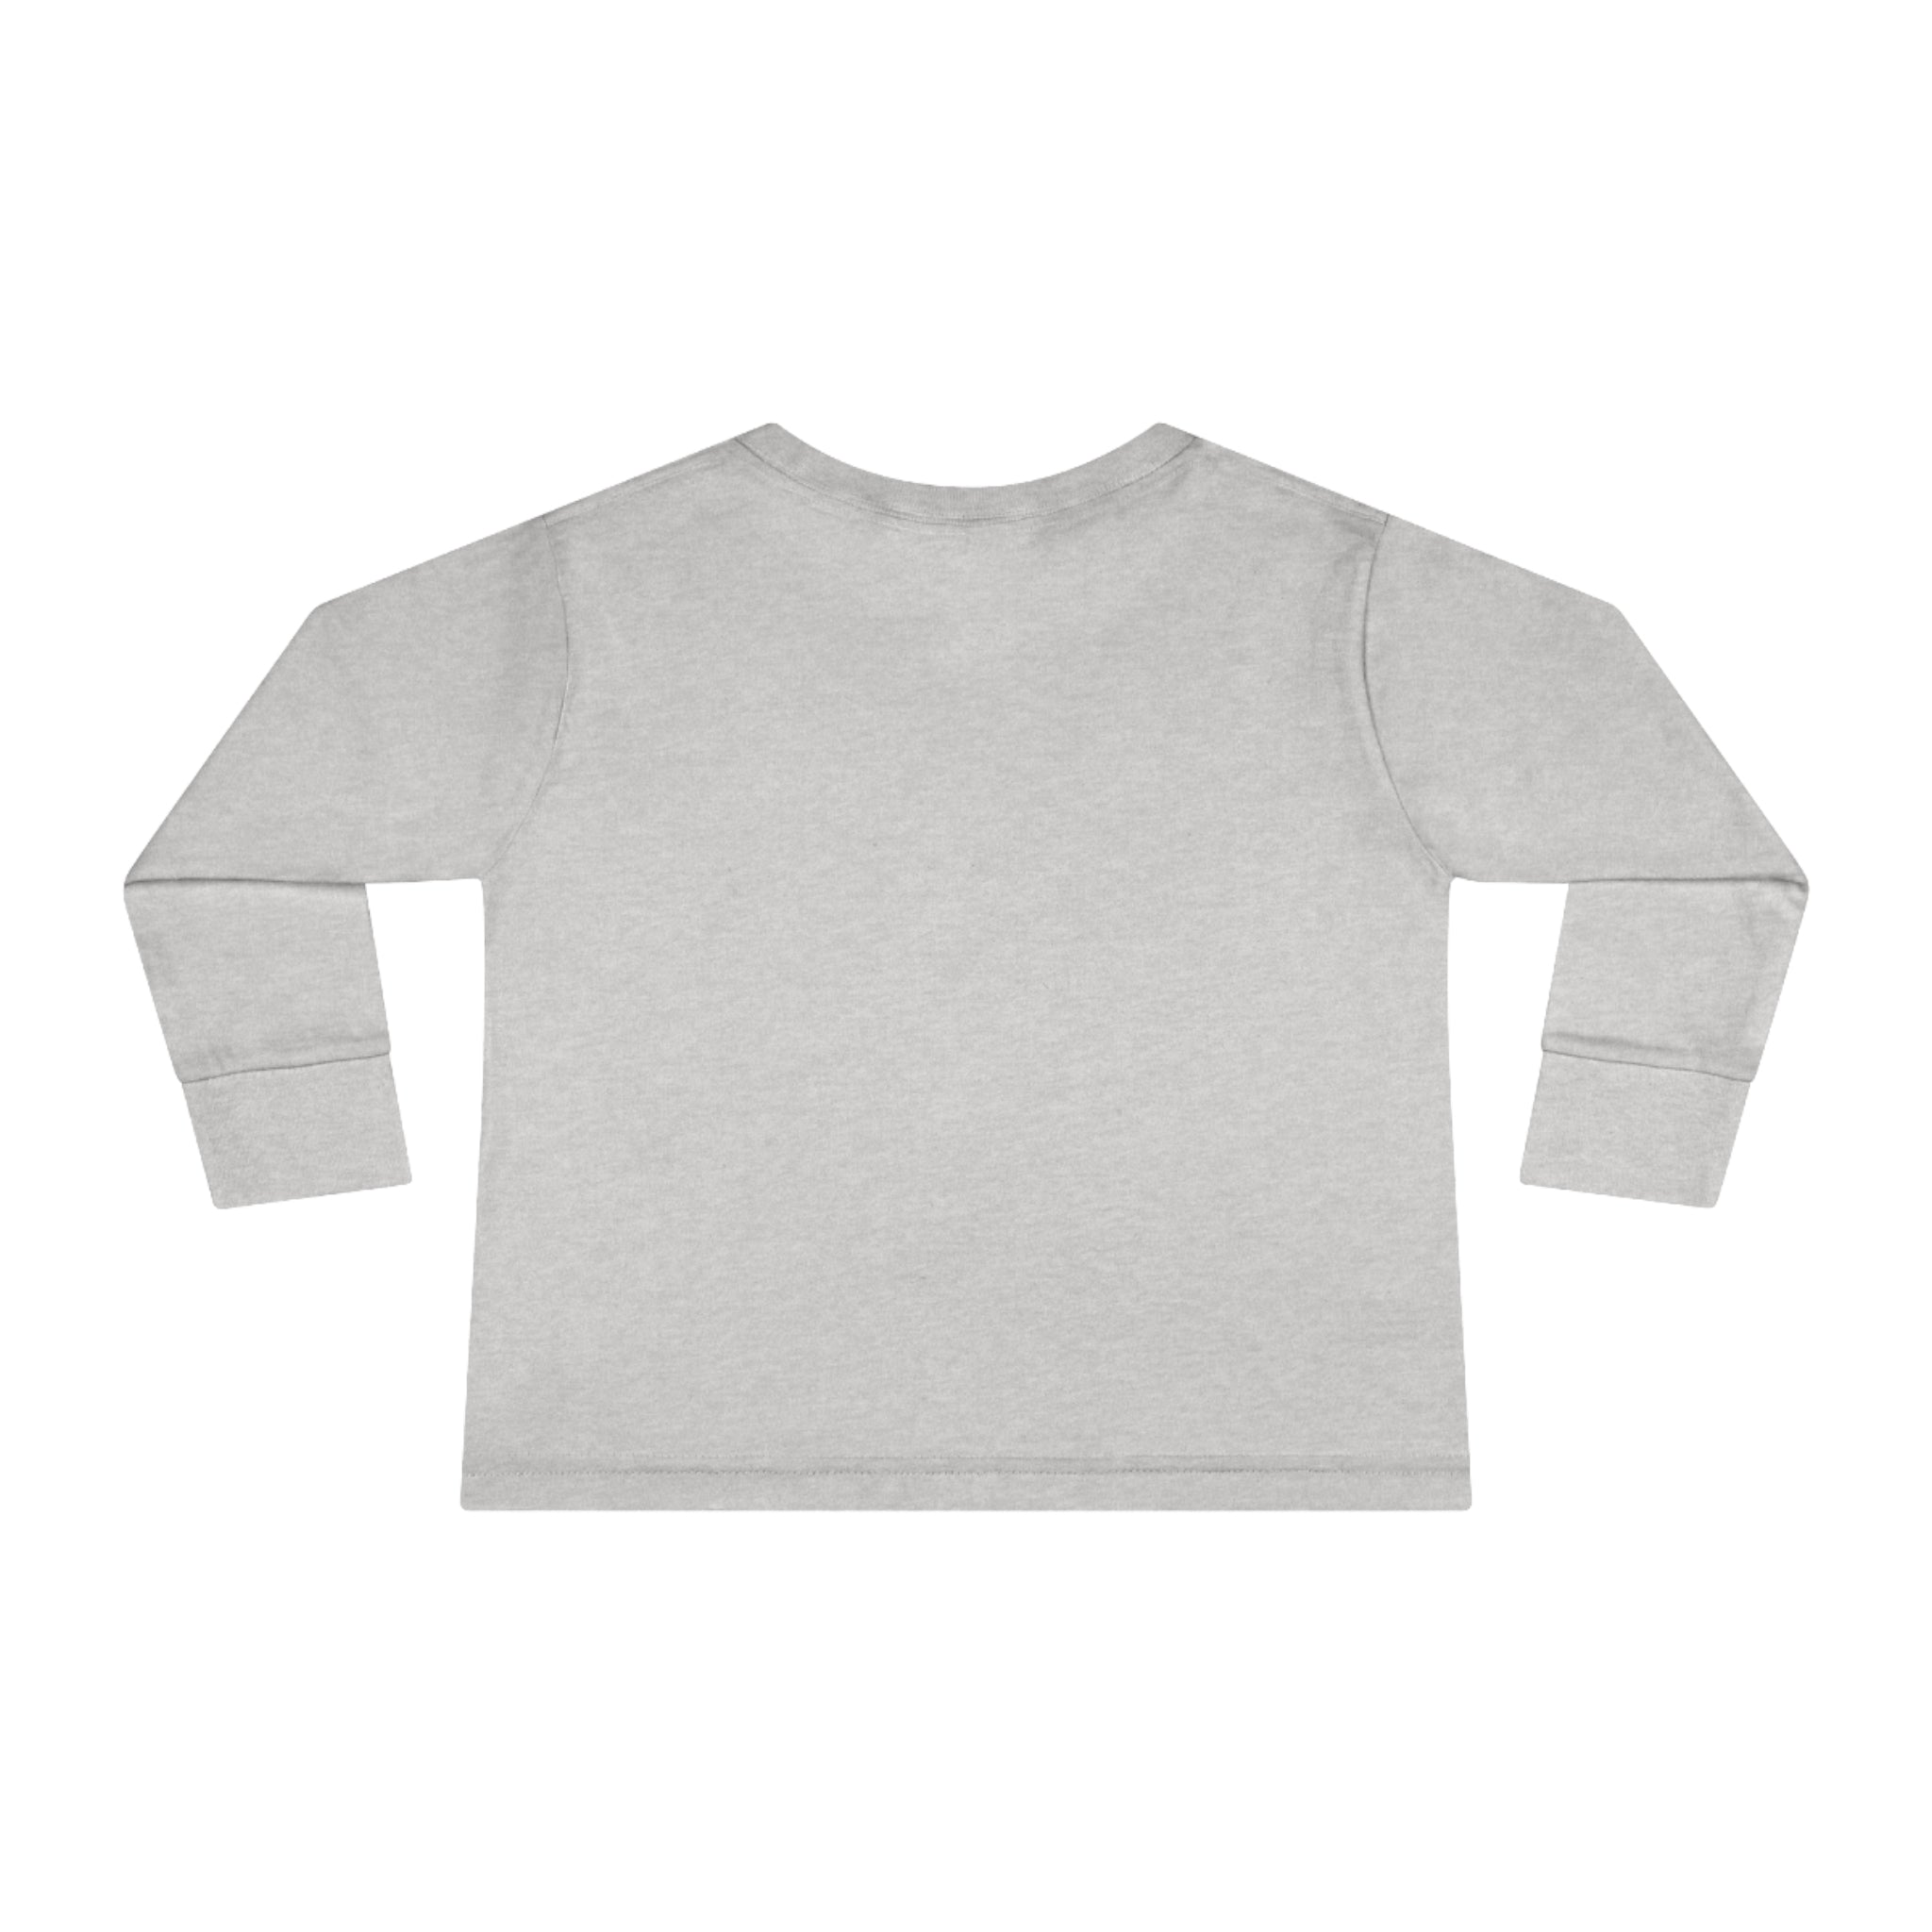 Toddler Long Sleeve  Cuddly Bear T-shirt